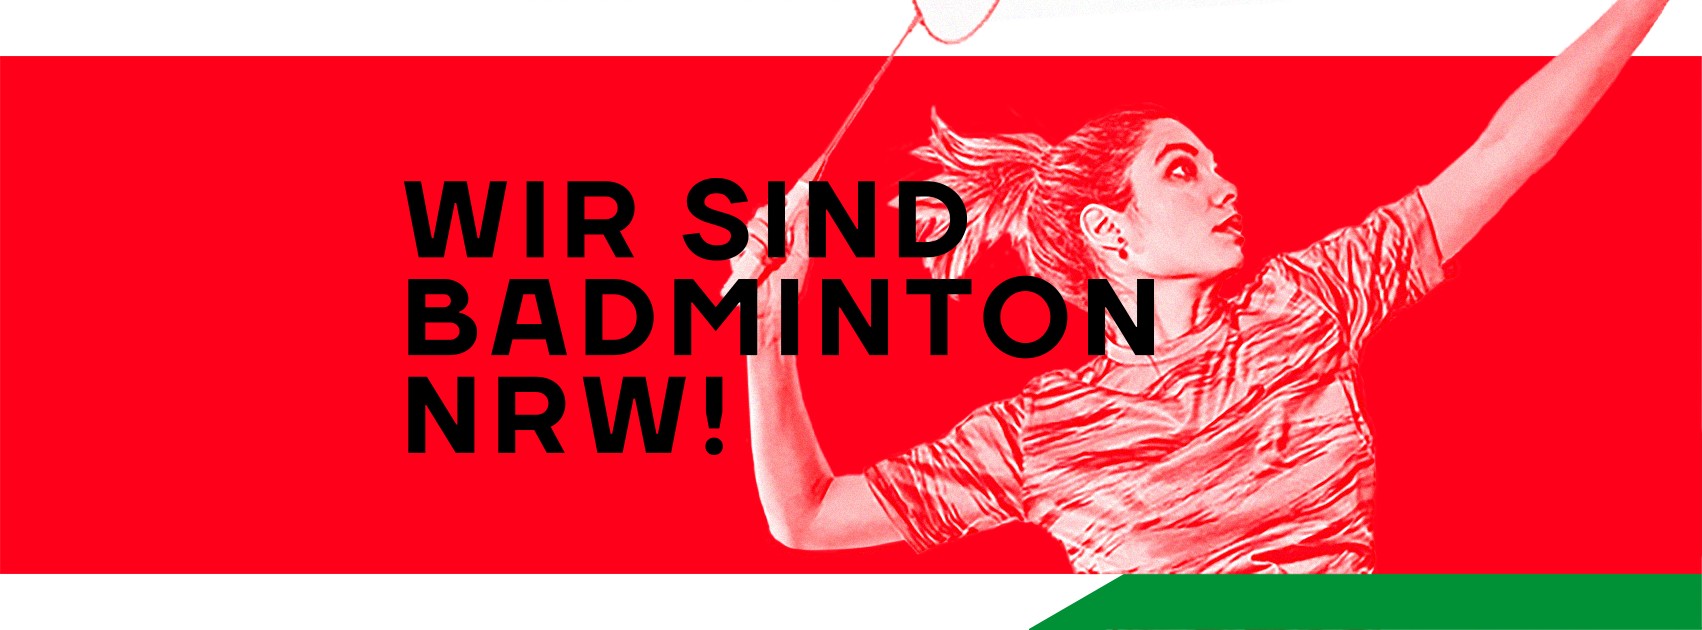 www.badminton.nrw